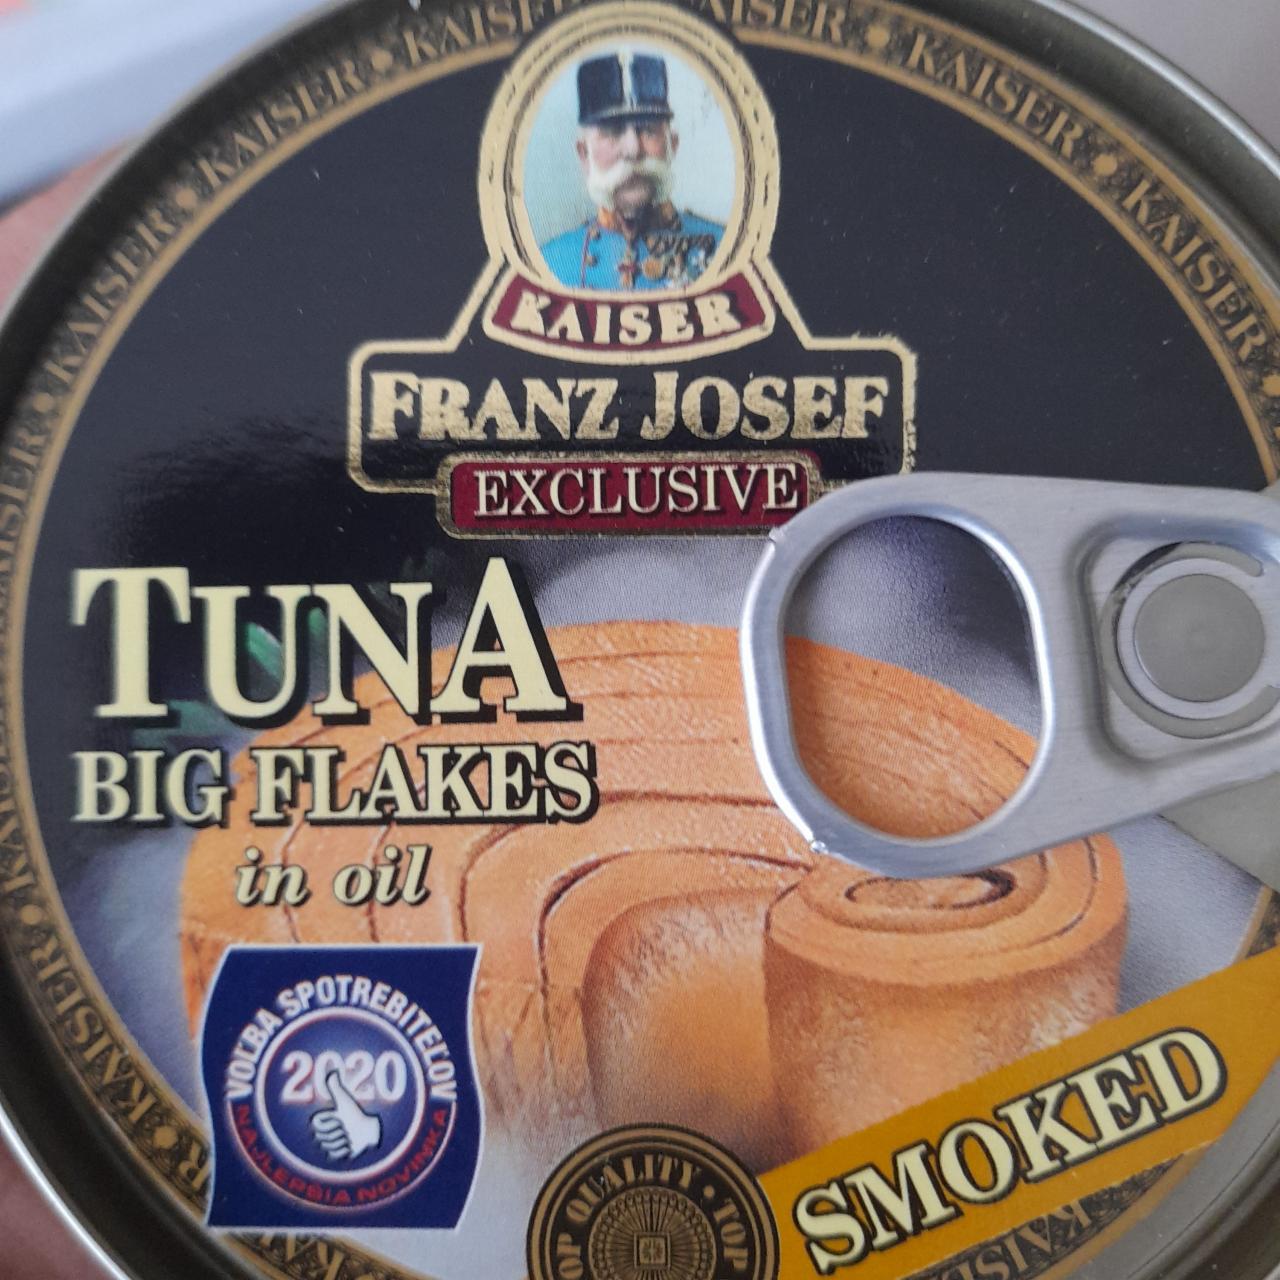 Fotografie - Tuna Big Flakes in sunflower oil with Smoked flavour Kaiser Franz Josef